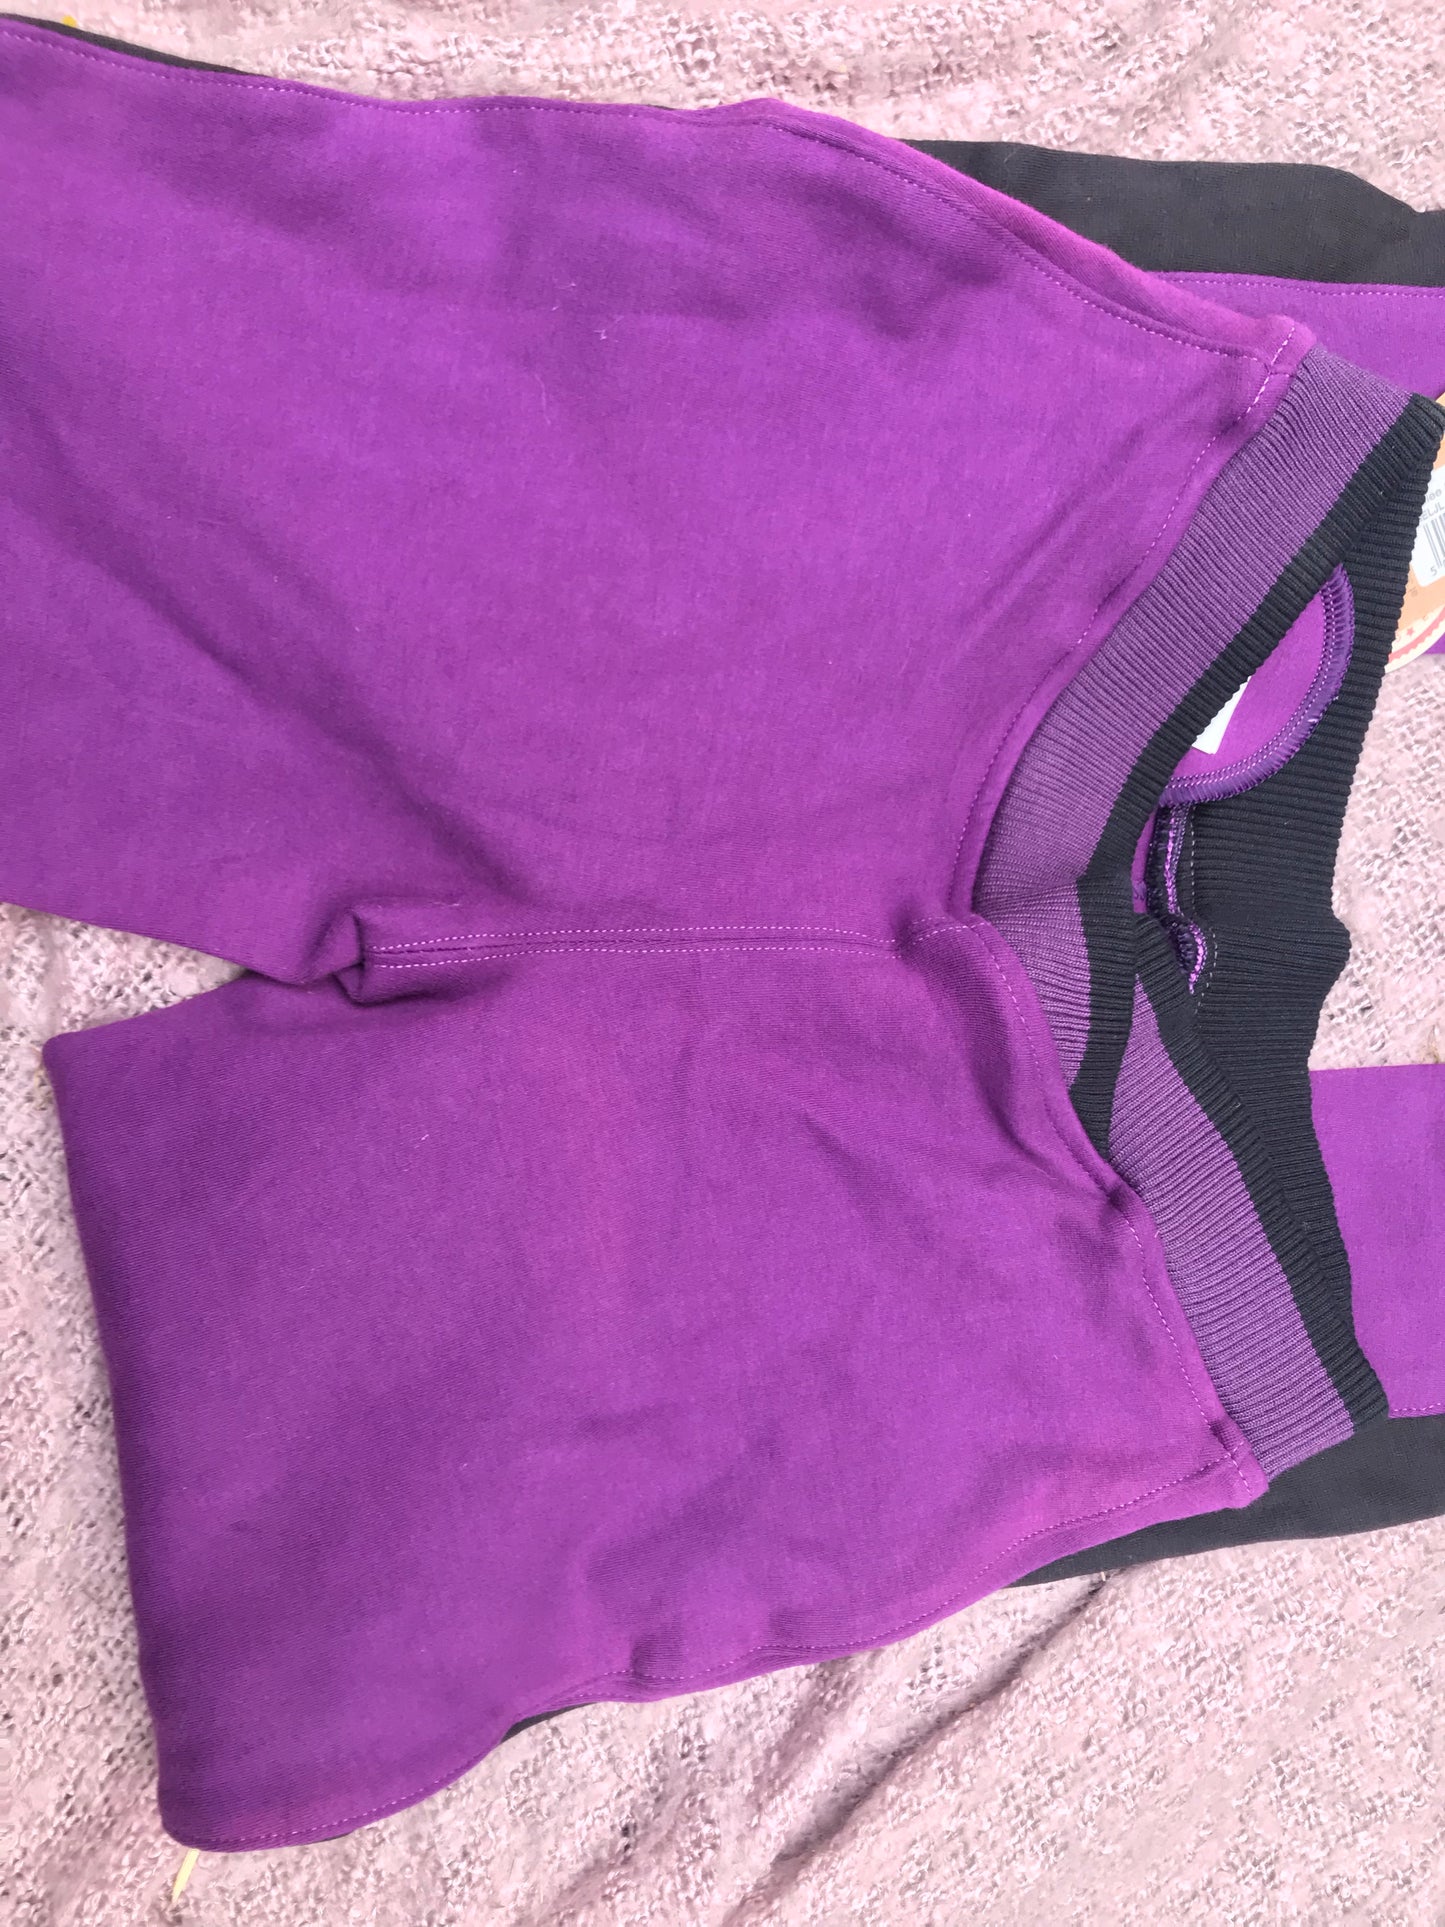 BRAND NEW purple harry hall jogger jodhpurs size ladies 26” size 8 FREE POSTAGE